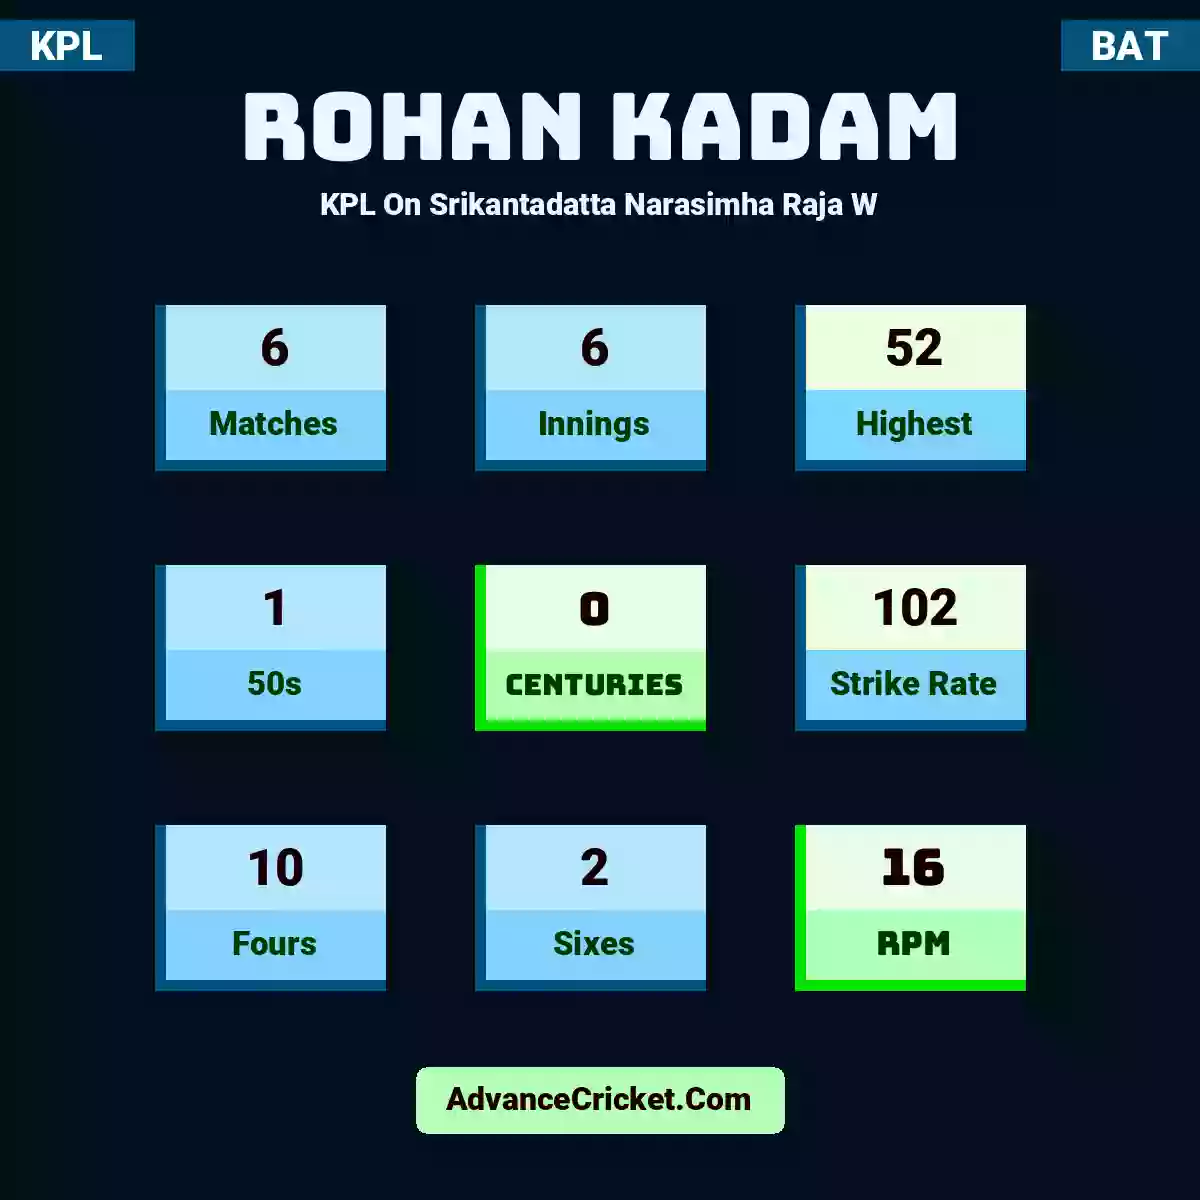 Rohan Kadam KPL  On Srikantadatta Narasimha Raja W, Rohan Kadam played 6 matches, scored 52 runs as highest, 1 half-centuries, and 0 centuries, with a strike rate of 102. R.Kadam hit 10 fours and 2 sixes, with an RPM of 16.